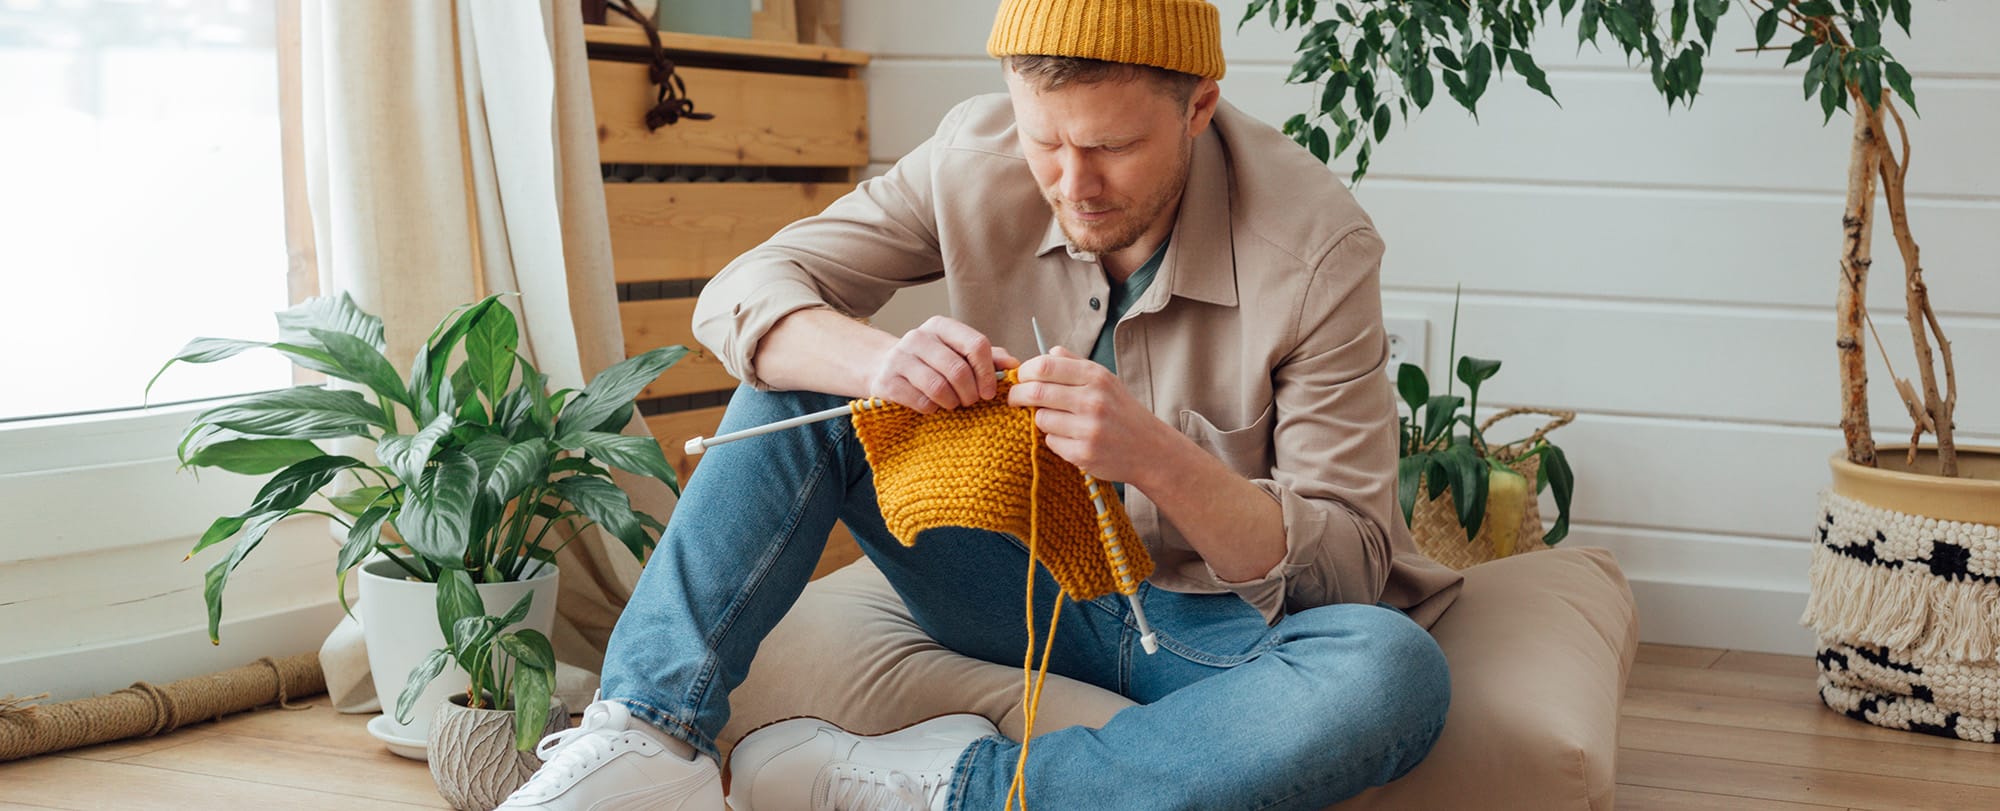 Digital Detox - man sitting on the floor knitting